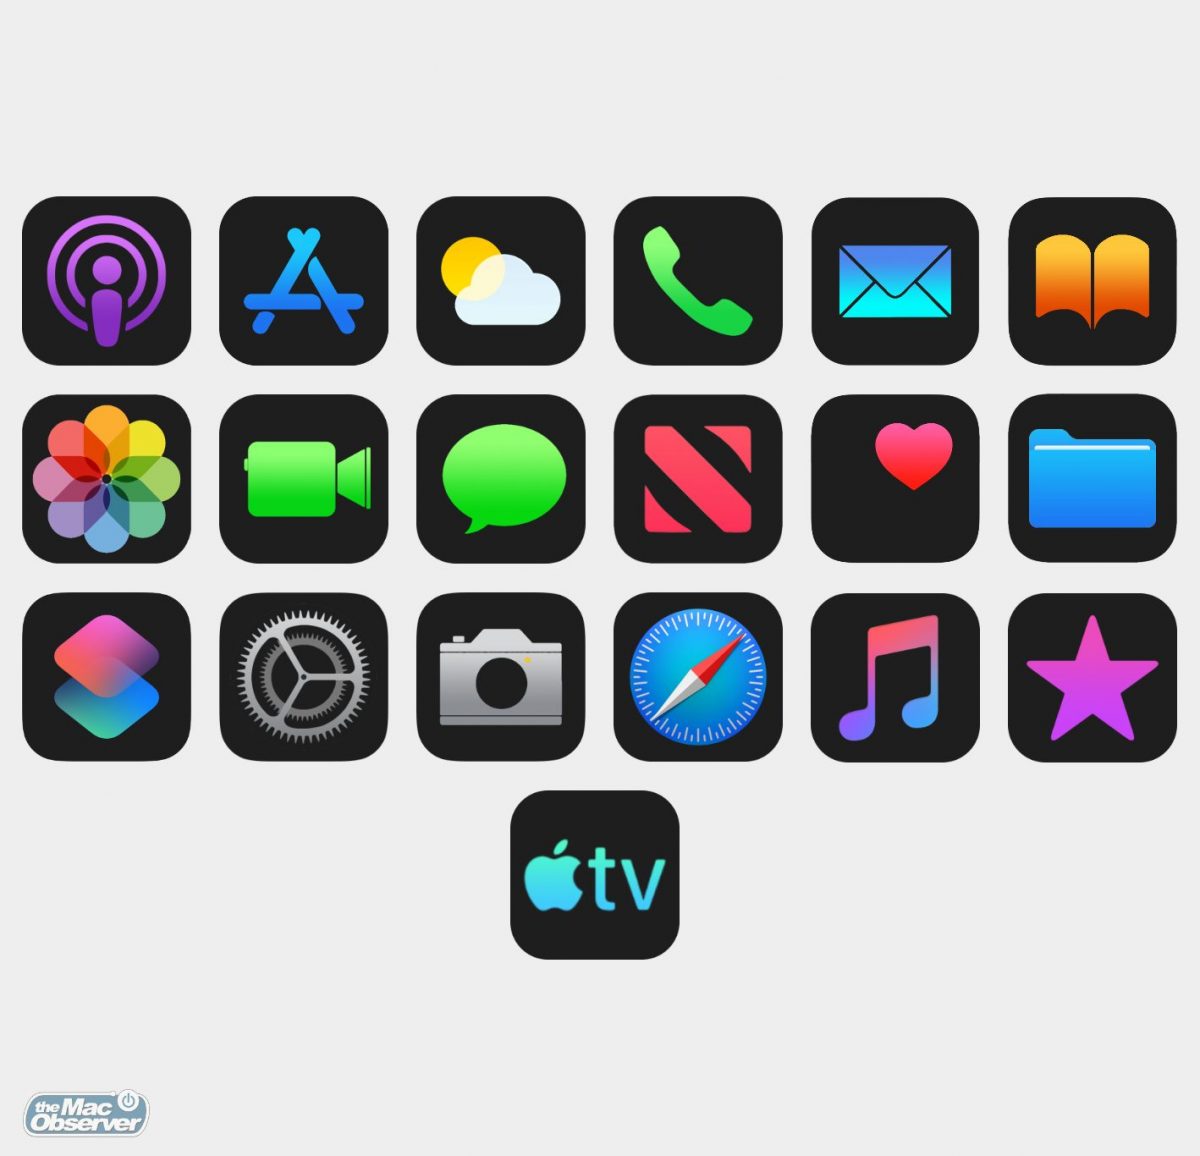 Dark Mode Icons for iOS